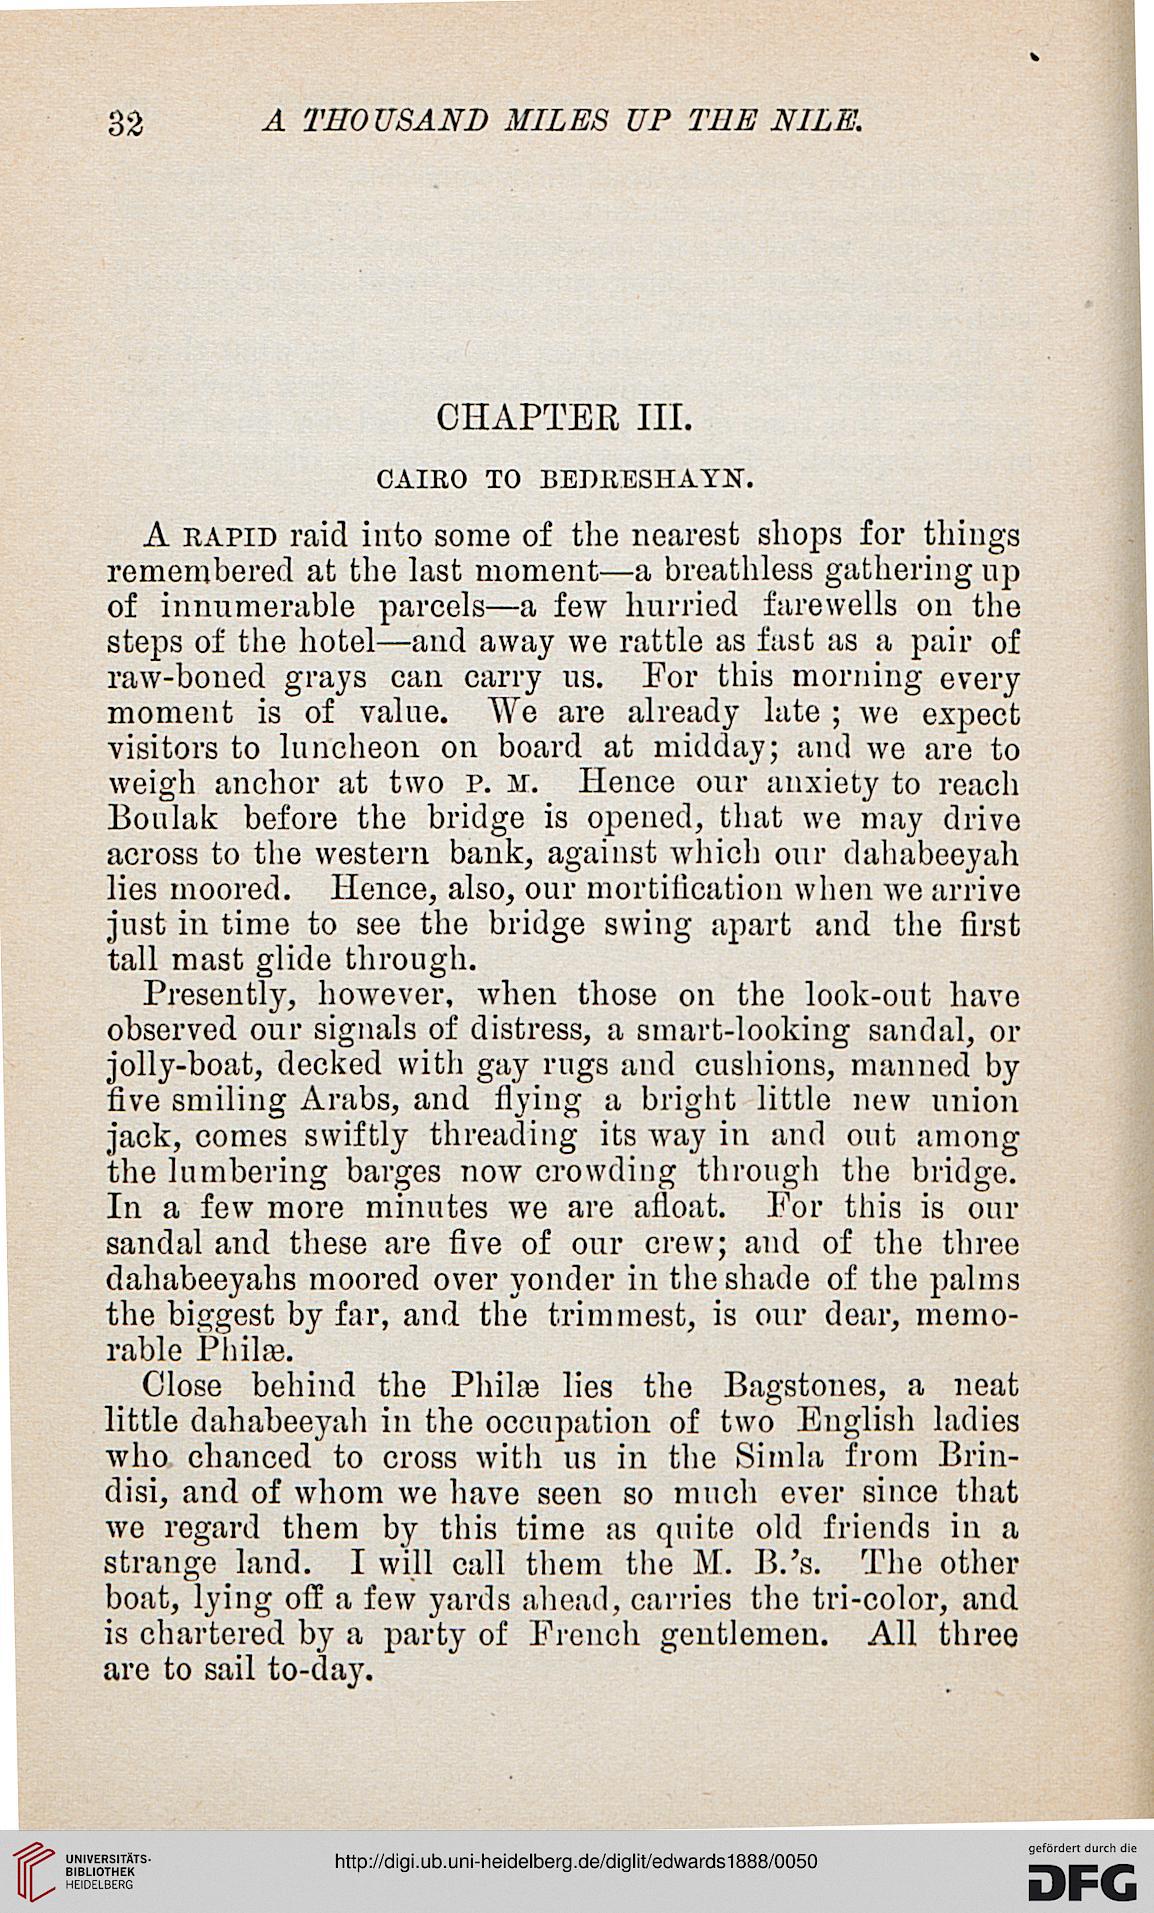 Edwards Amelia B A Thousand Miles Up The Nile New York 1888